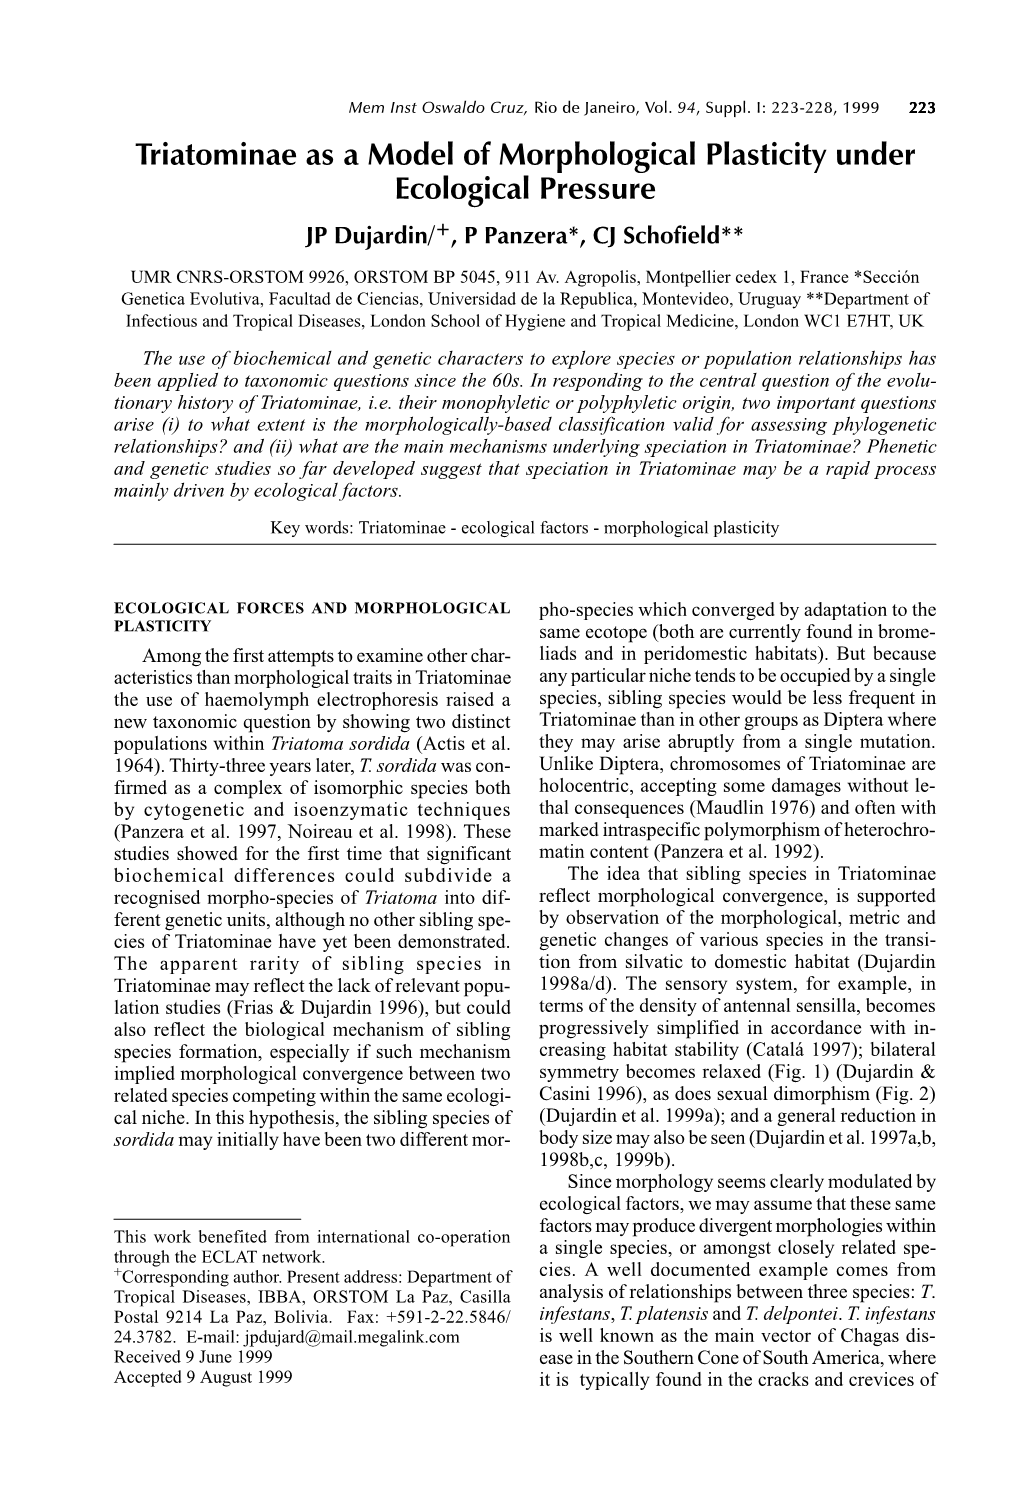 Triatominae As a Model of Morphological Plasticity Under Ecological Pressure JP Dujardin/+, P Panzera*, CJ Schofield**